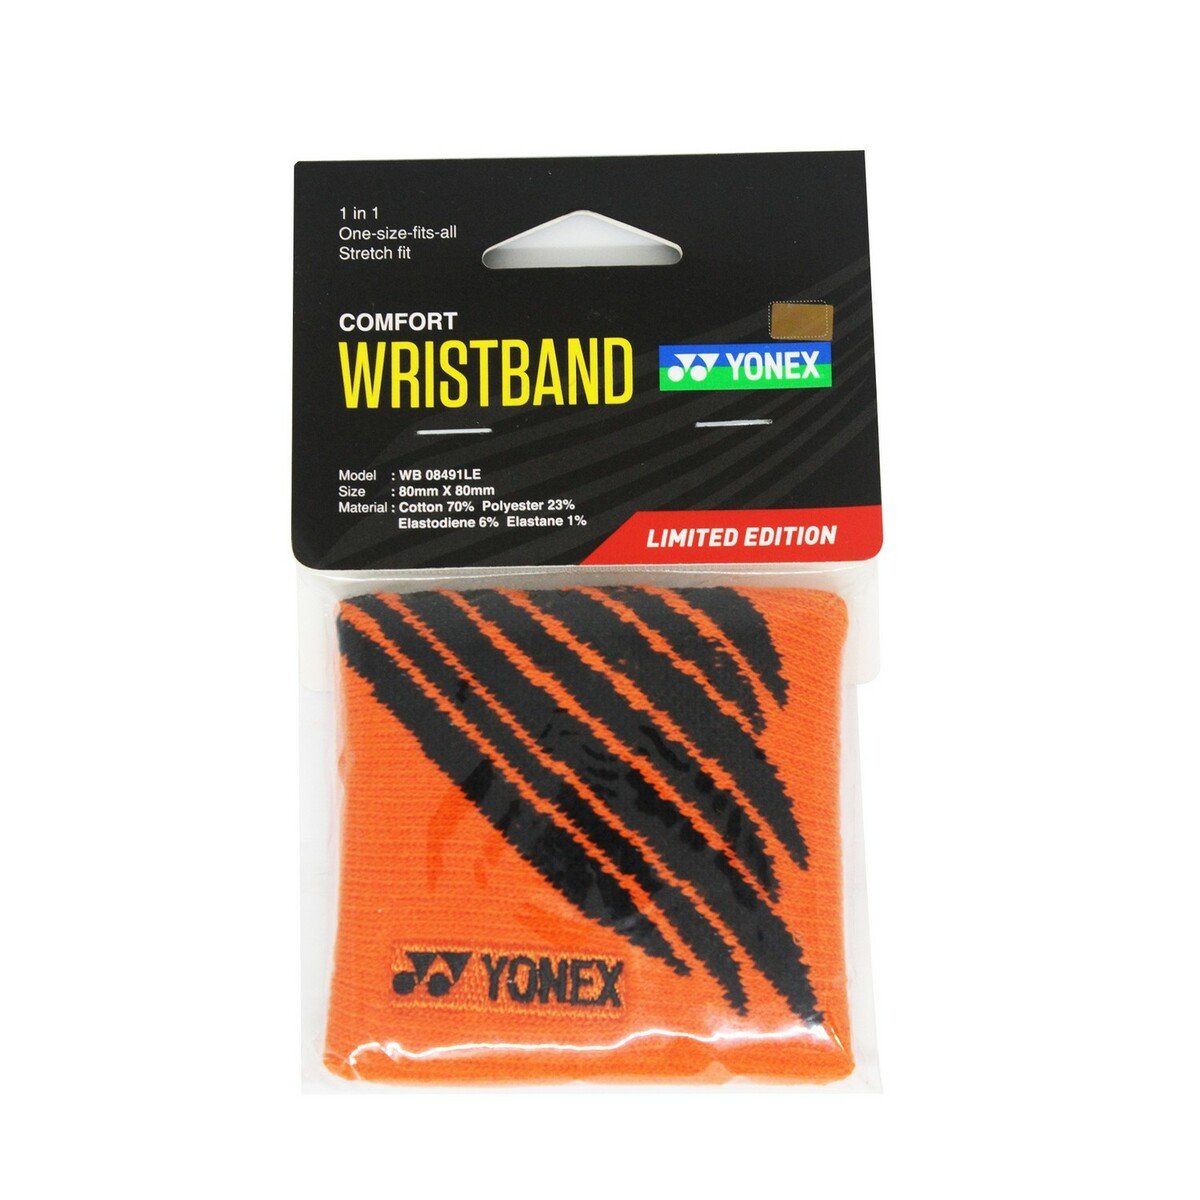 Yonex Wristband Wb 08491LE 80MM x 80MM